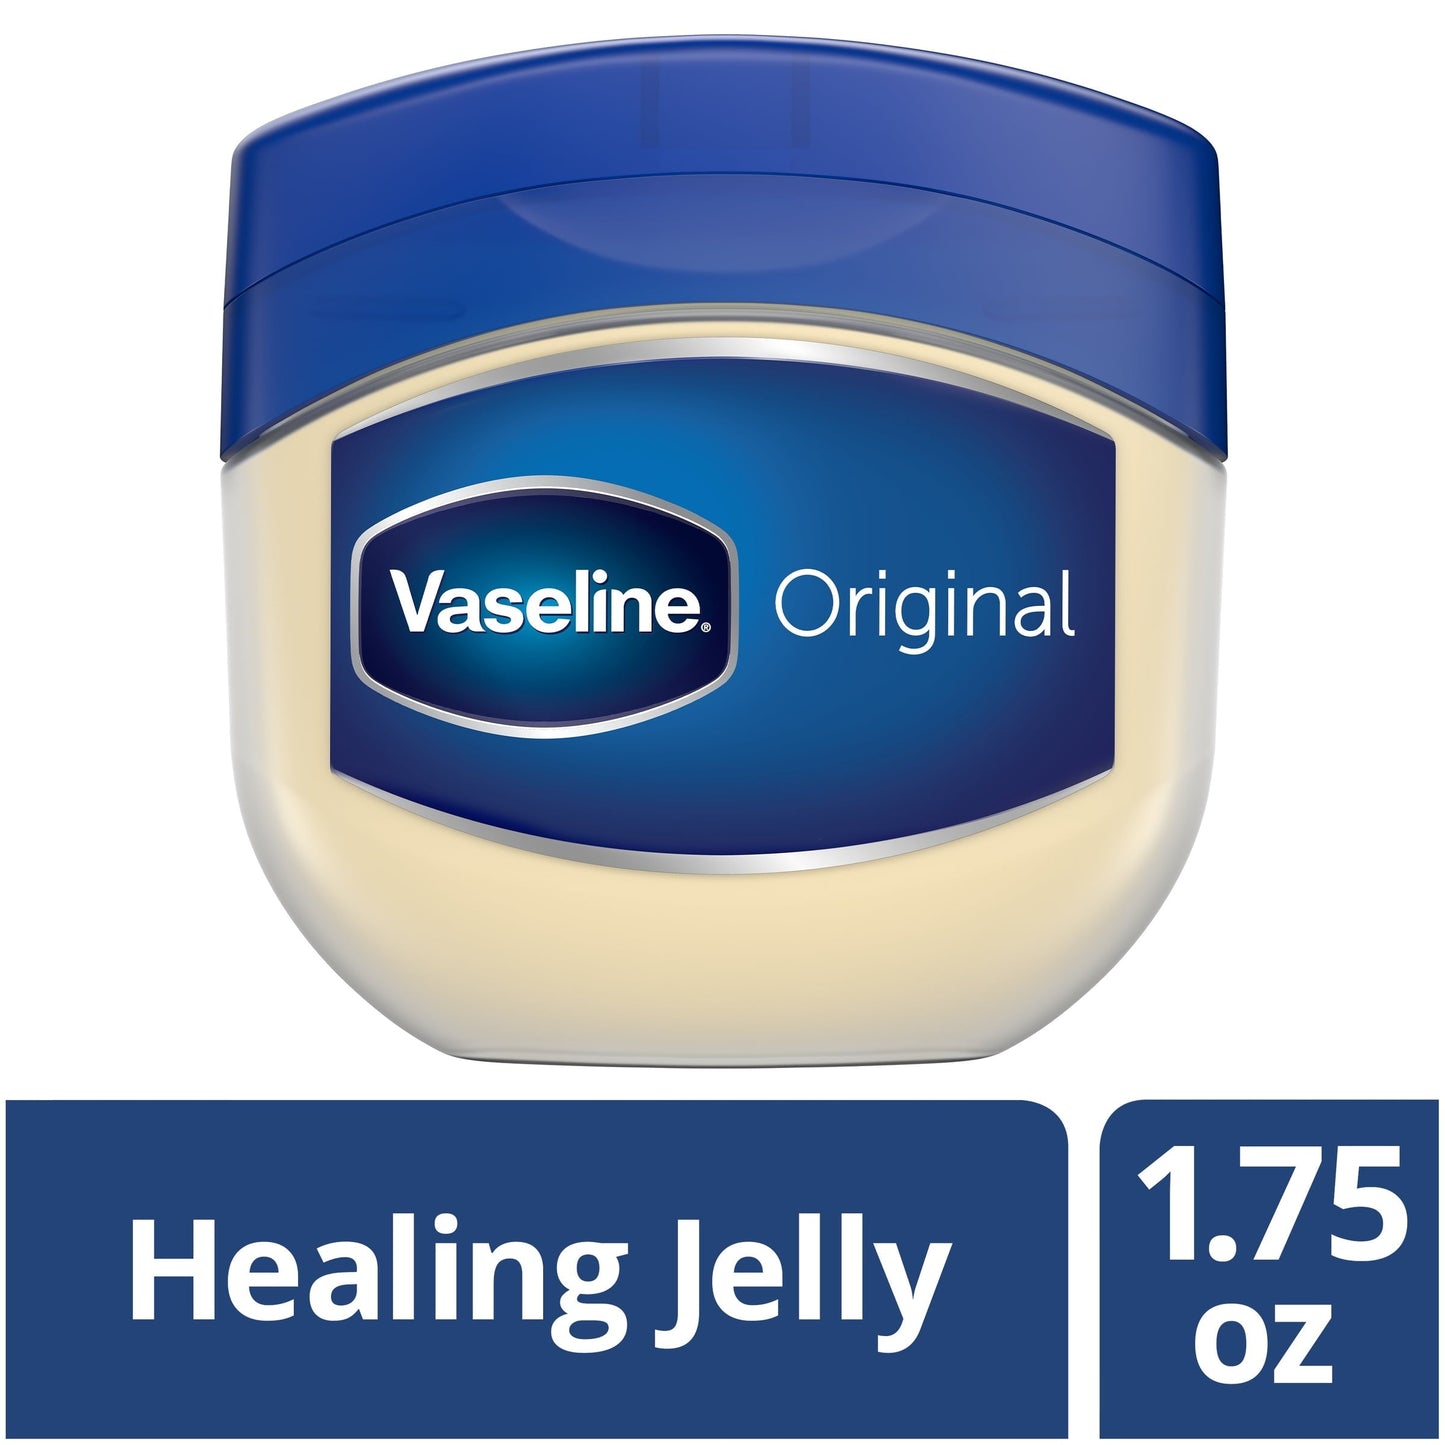 Vaseline 100% Pure Petroleum Jelly Original Vaseline 1.75 oz